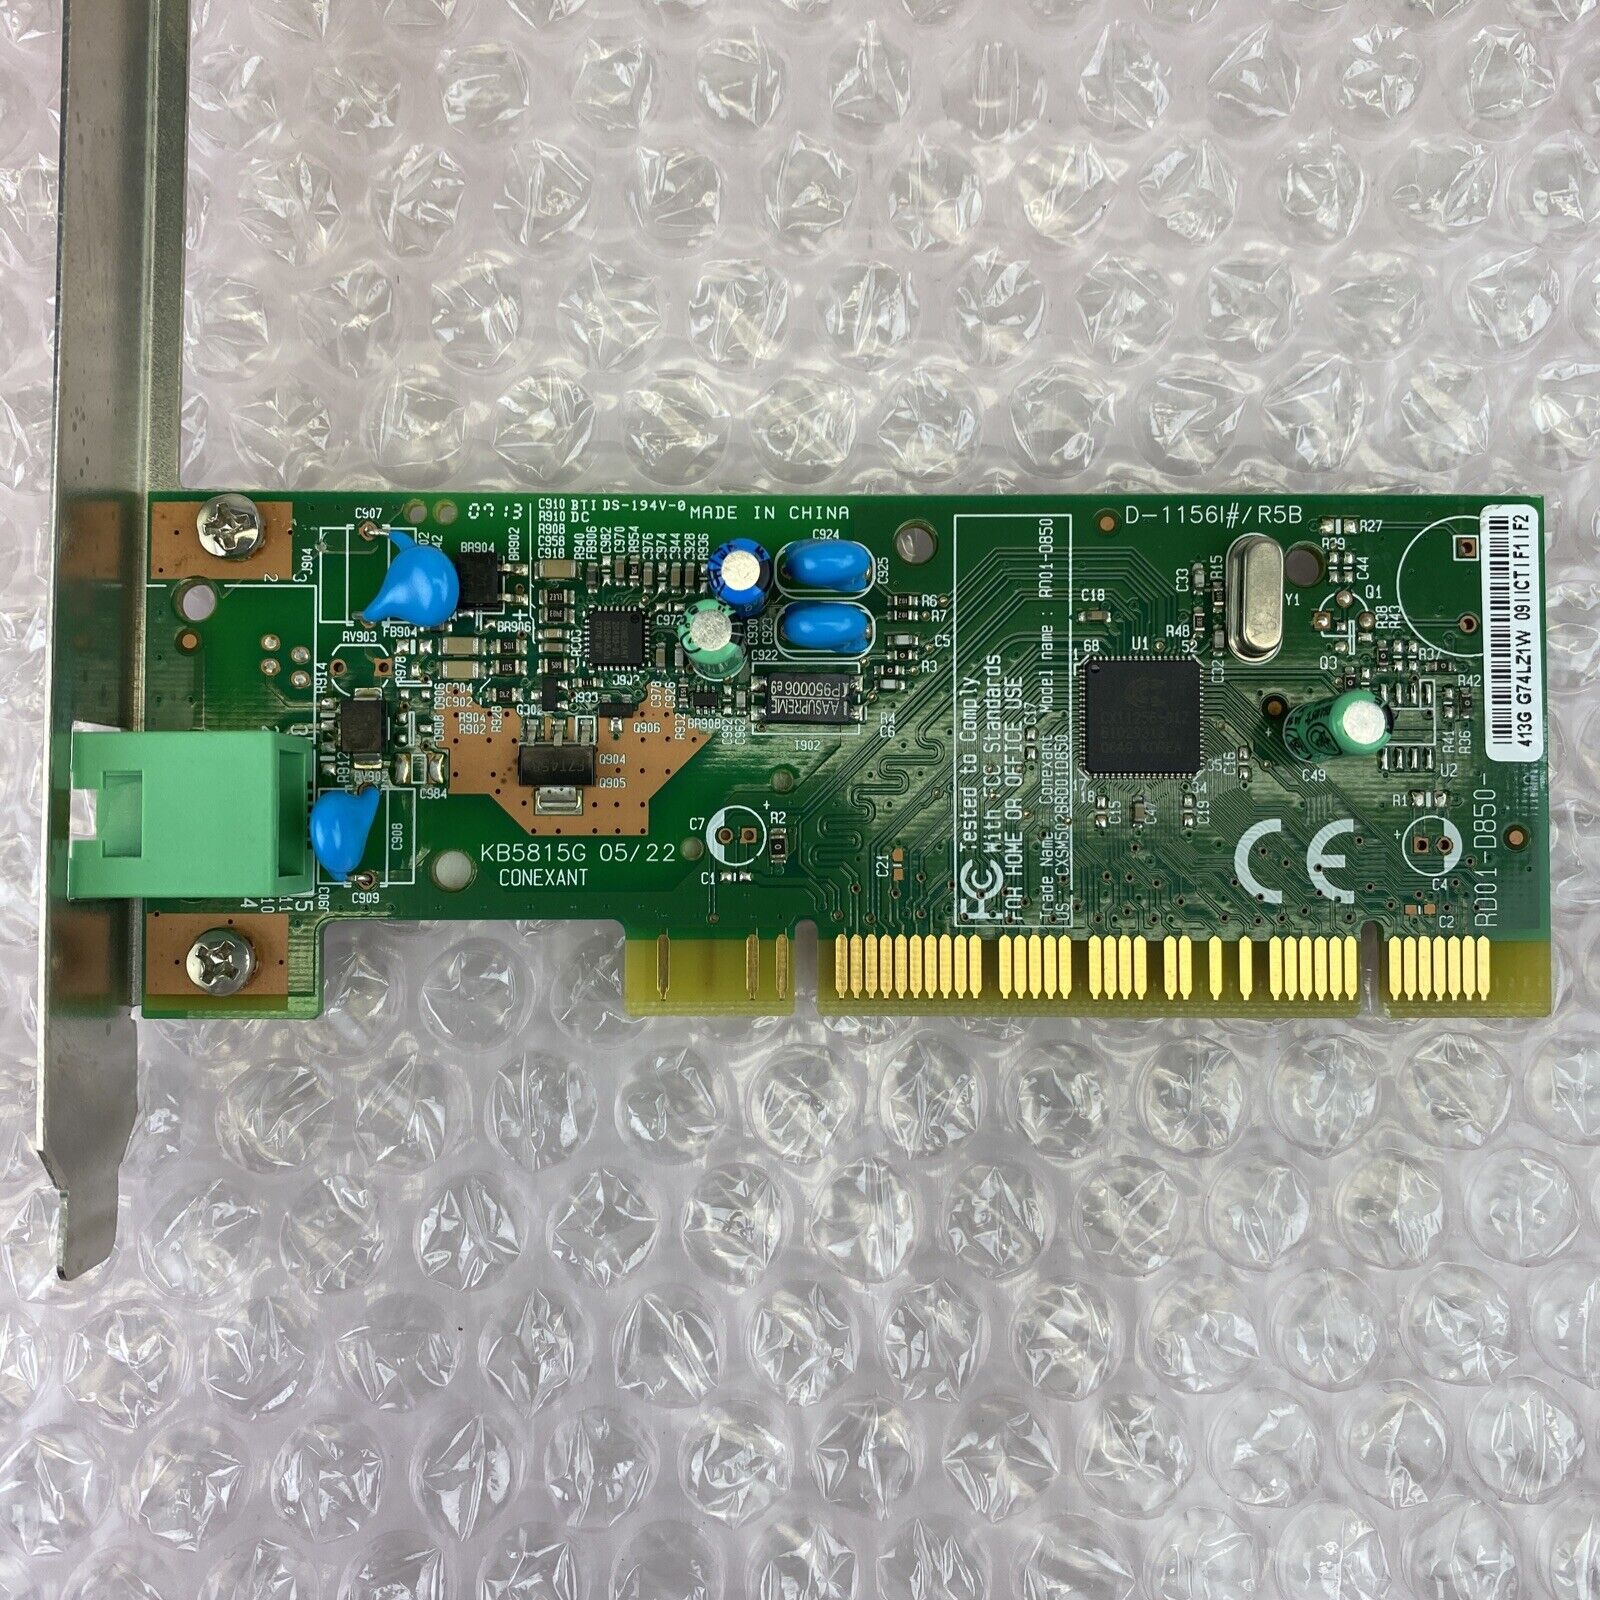 Lot of 3 Conexant RD01-D850 56k fax modem PCI cards 5188-2907 KB5815G 05/22